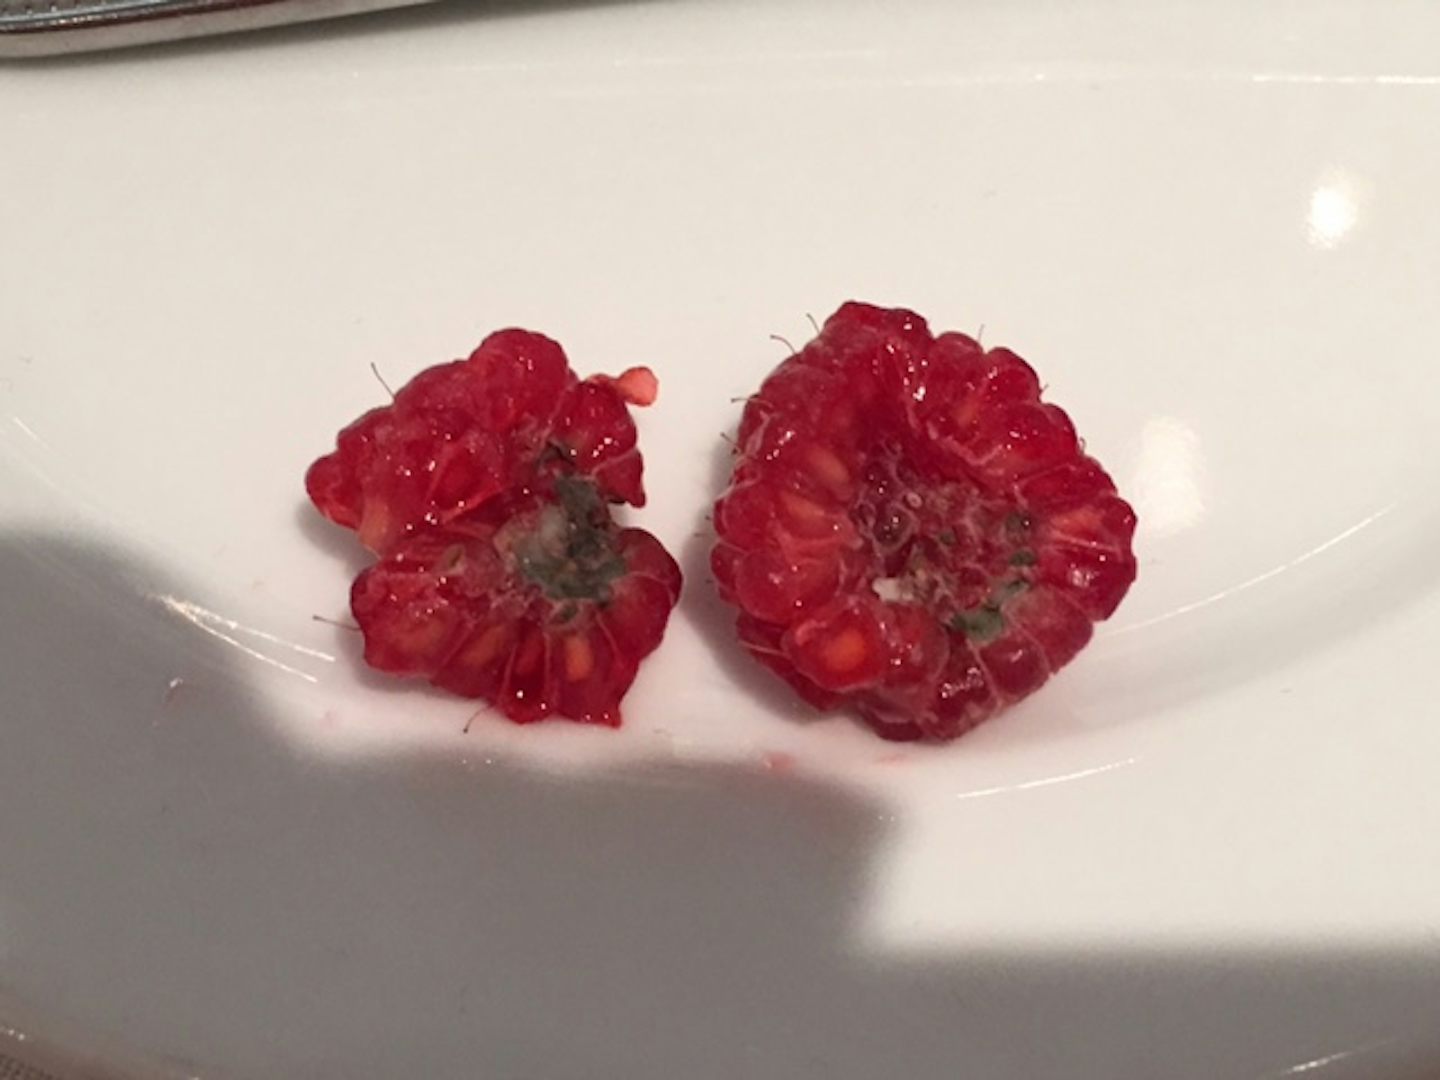 molded berries served for breakfast